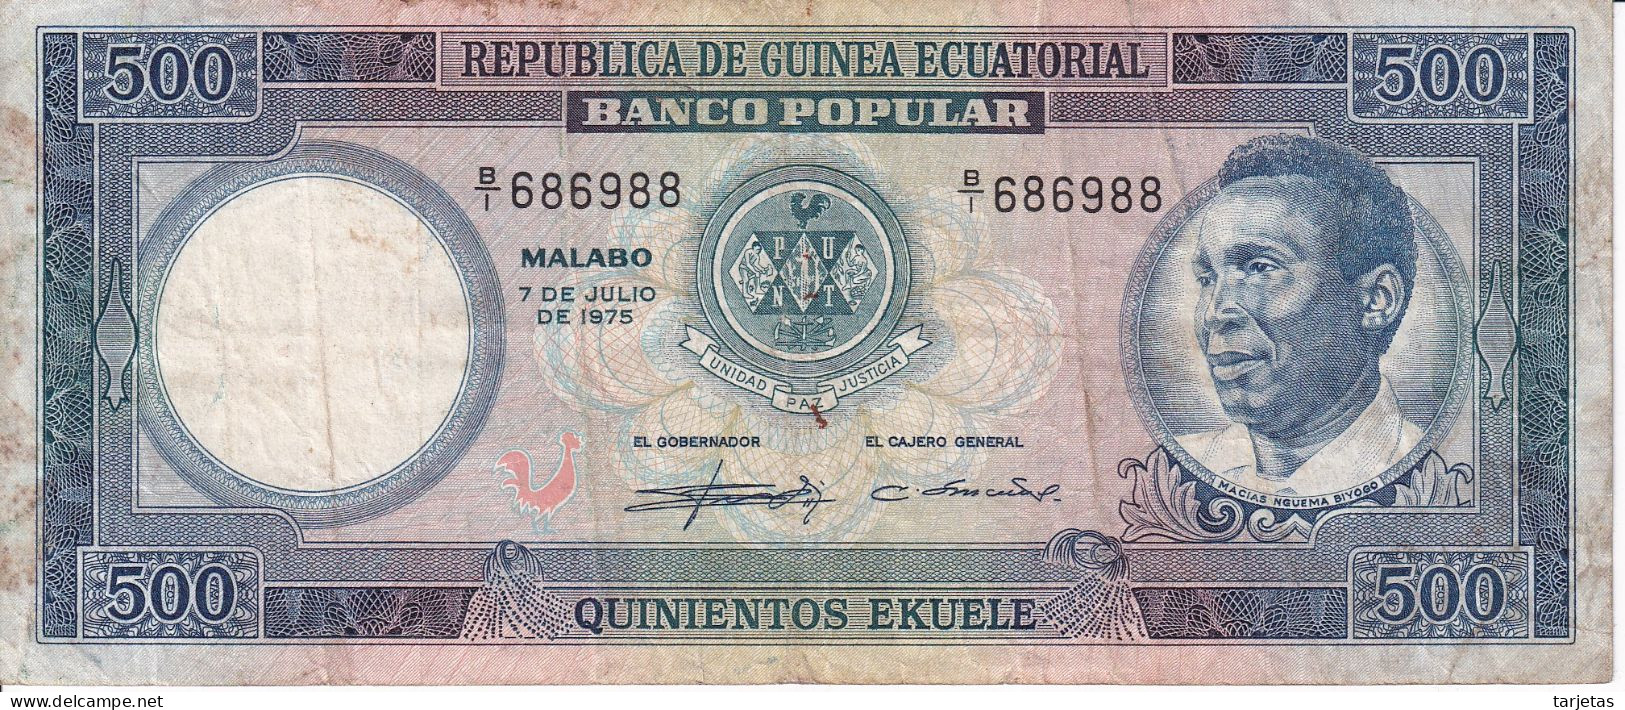 BILLETE DE GUINEA ECUATORIAL DE 500 EKUELE DEL AÑO 1975  (BANKNOTE) - Guinea Ecuatorial